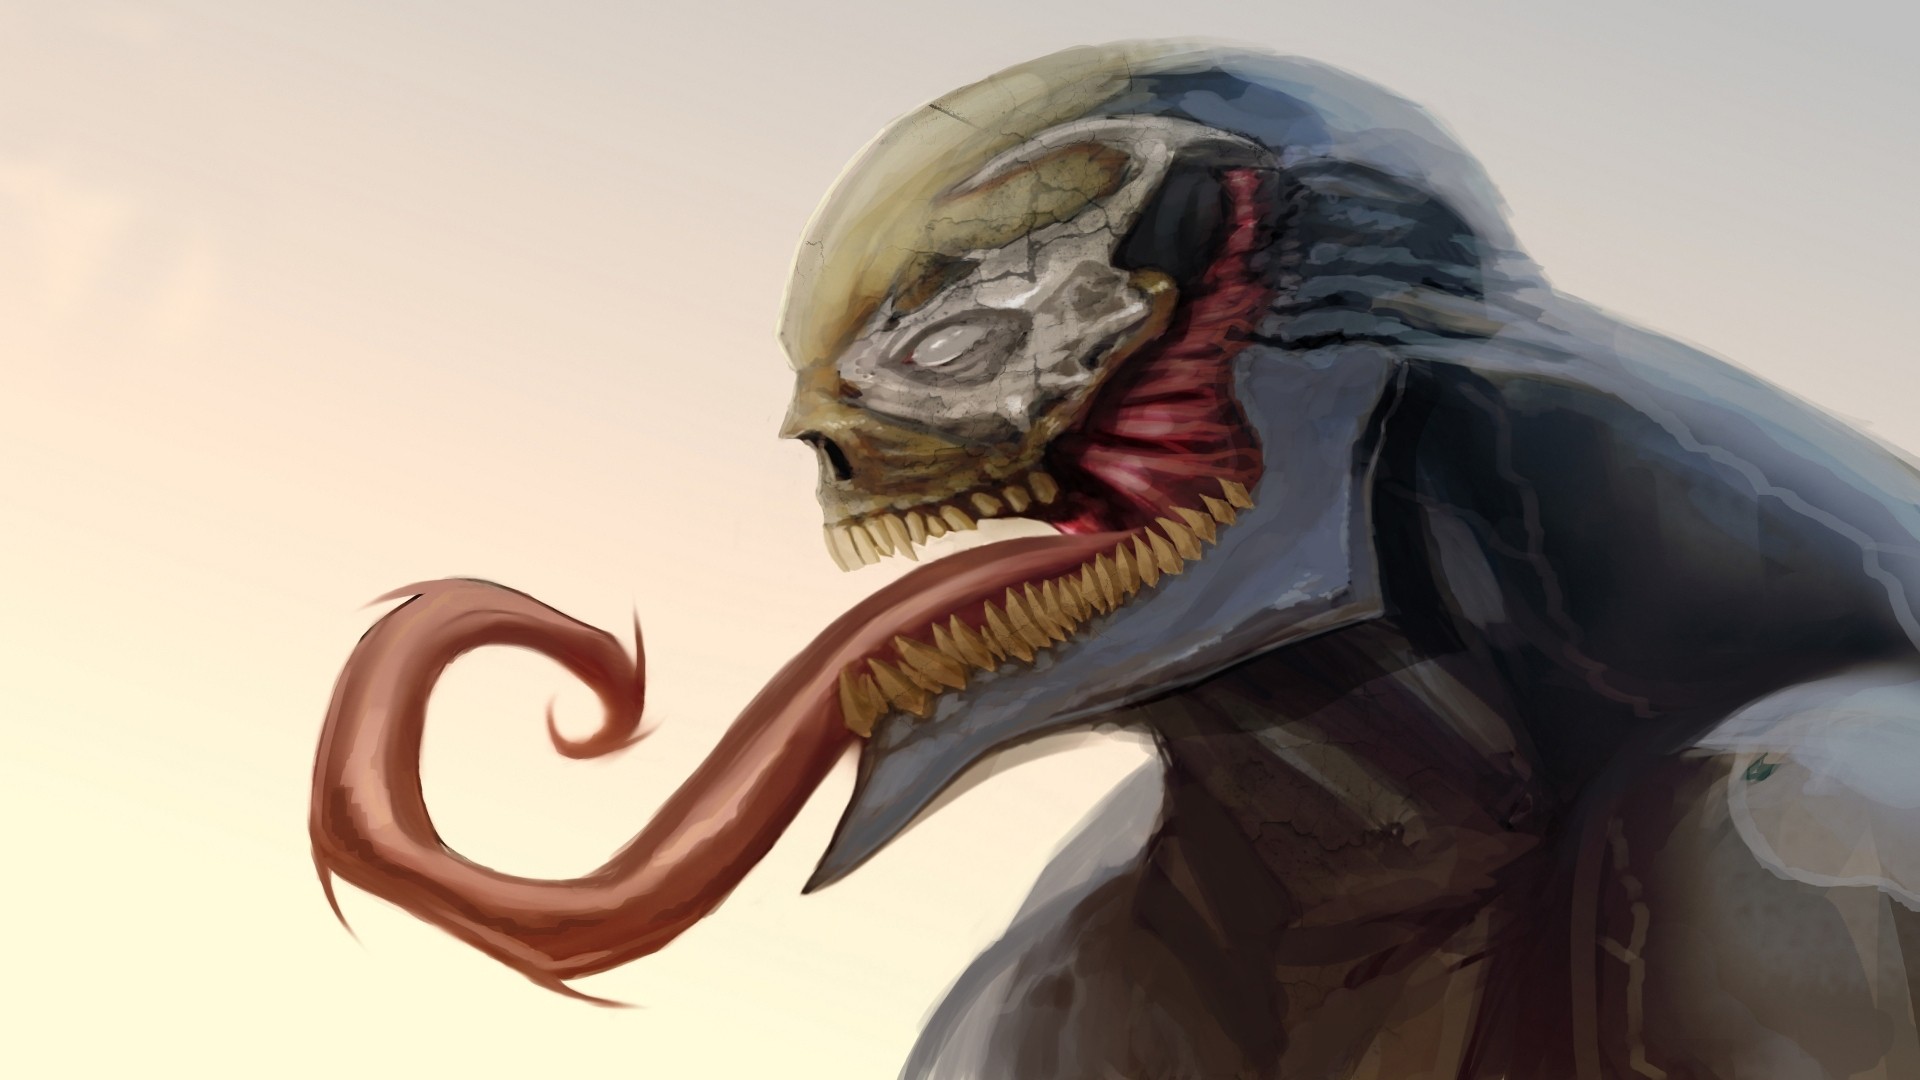 General 1920x1080 Marvel Comics eddie brock Venom creature simple background